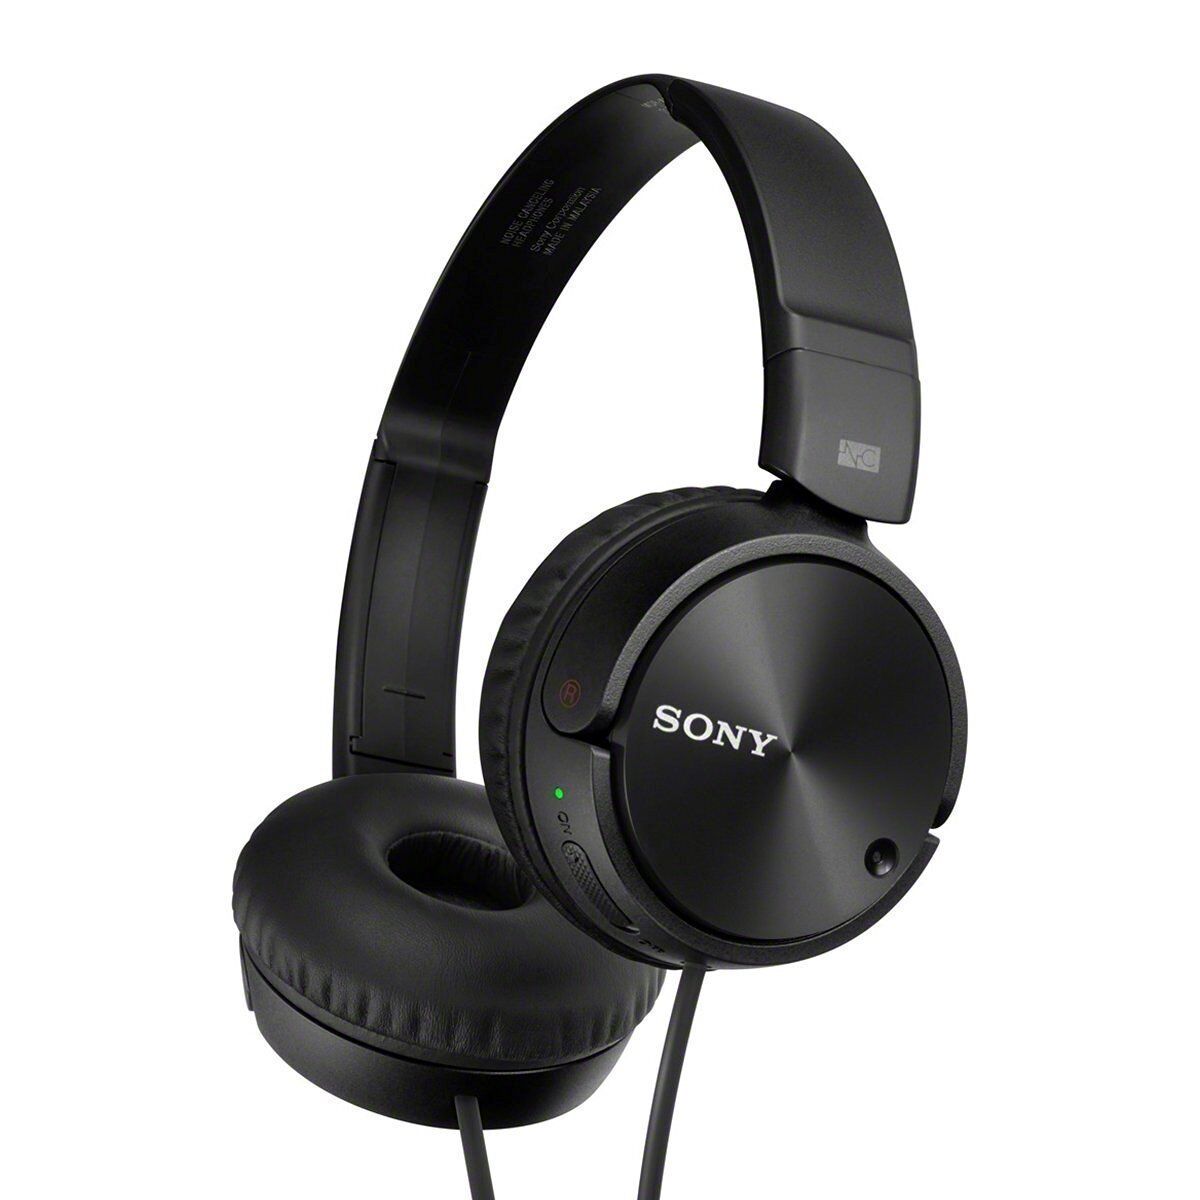 sony-headphones-connection-connecting-bluetooth-sony-headphones-to-iphone